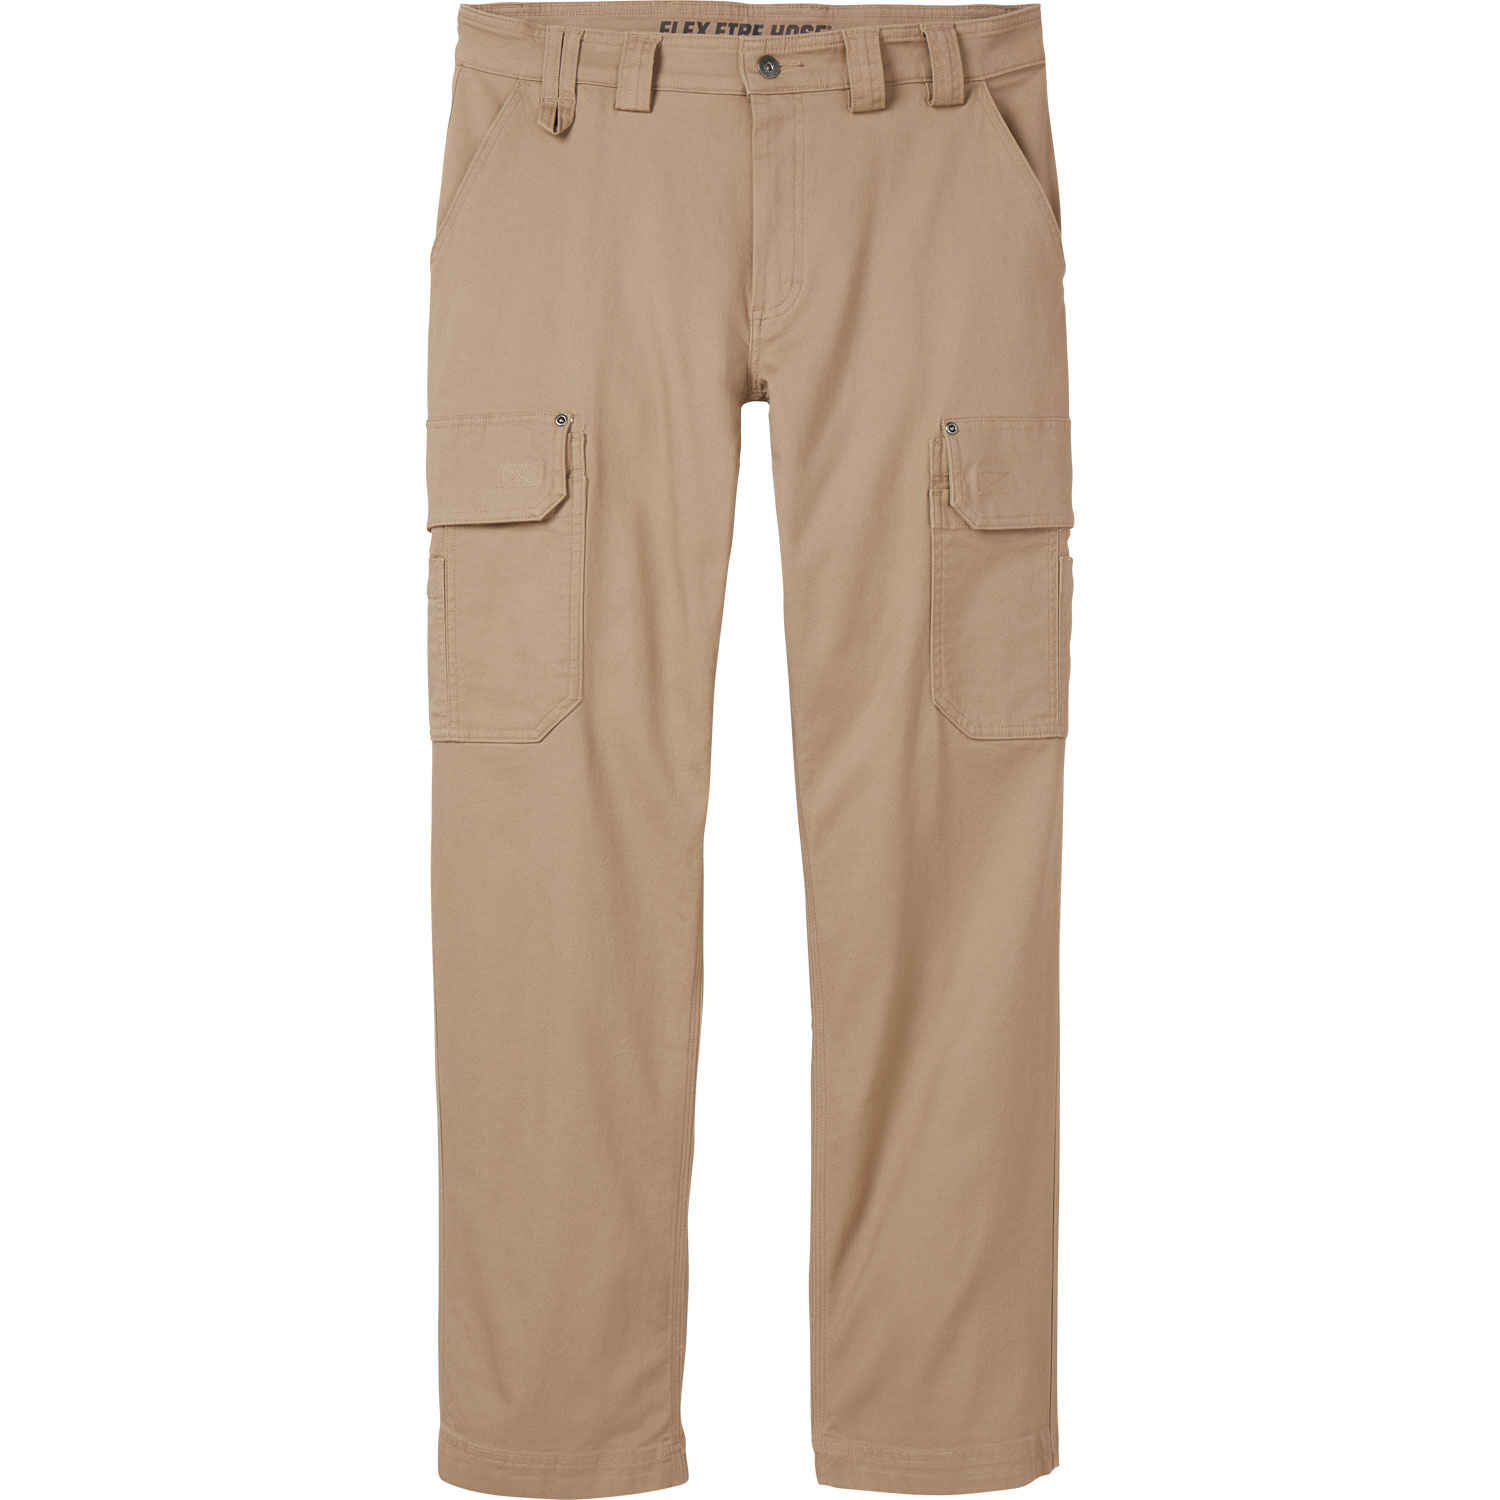 Men's Duluthflex Fire Hose Slim Fit Cargo Work Pants | Duluth